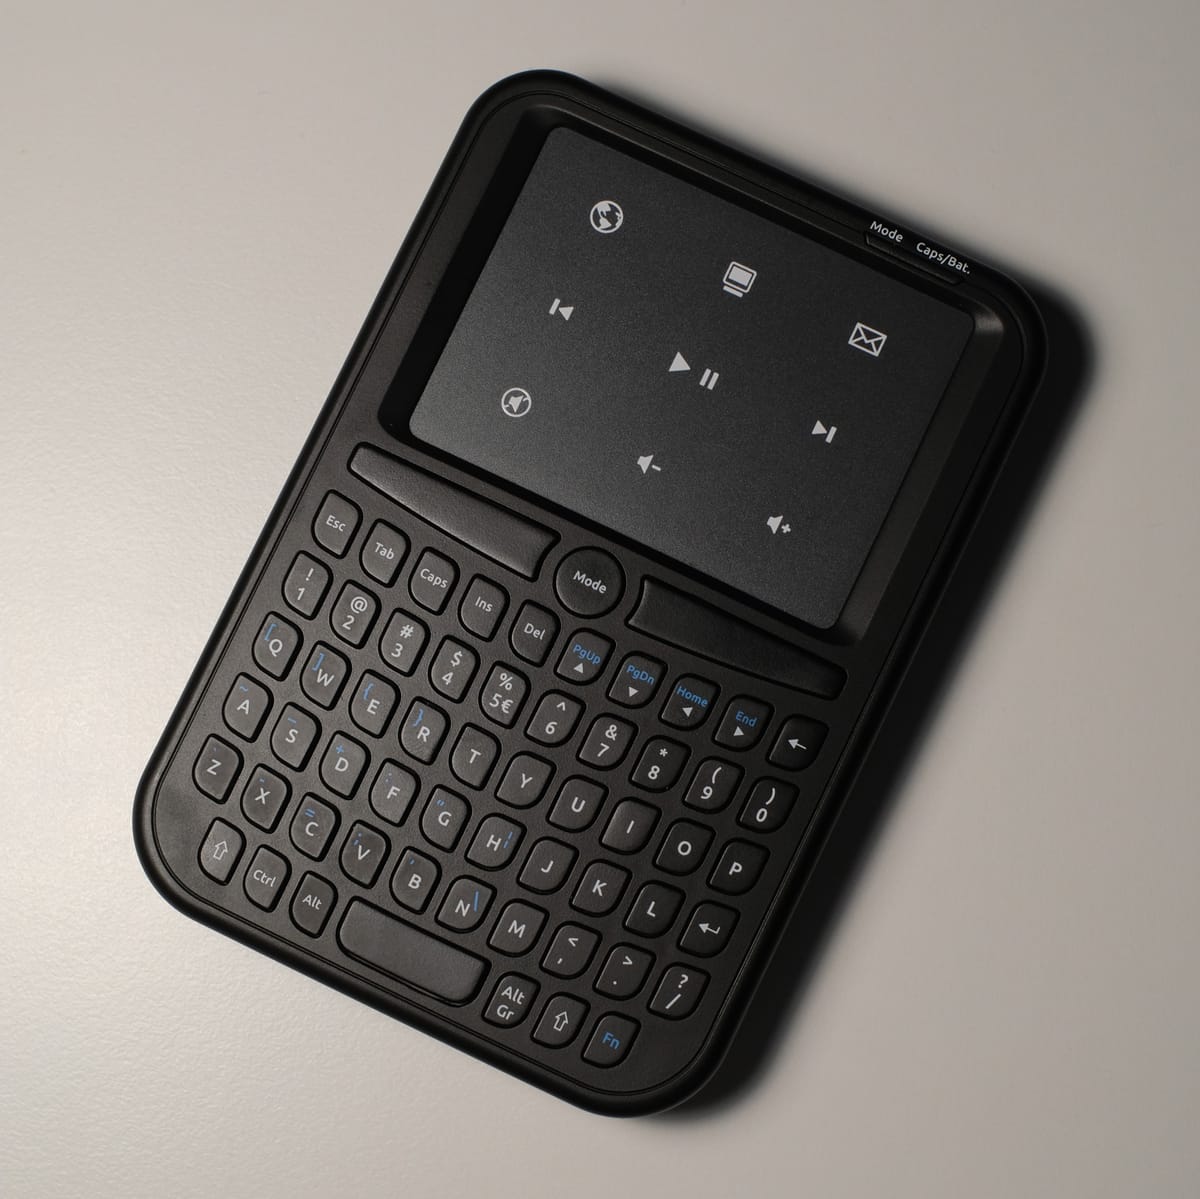 Weird Gadget review: BlackBerry-style wireless keyboard (Trust 17930)